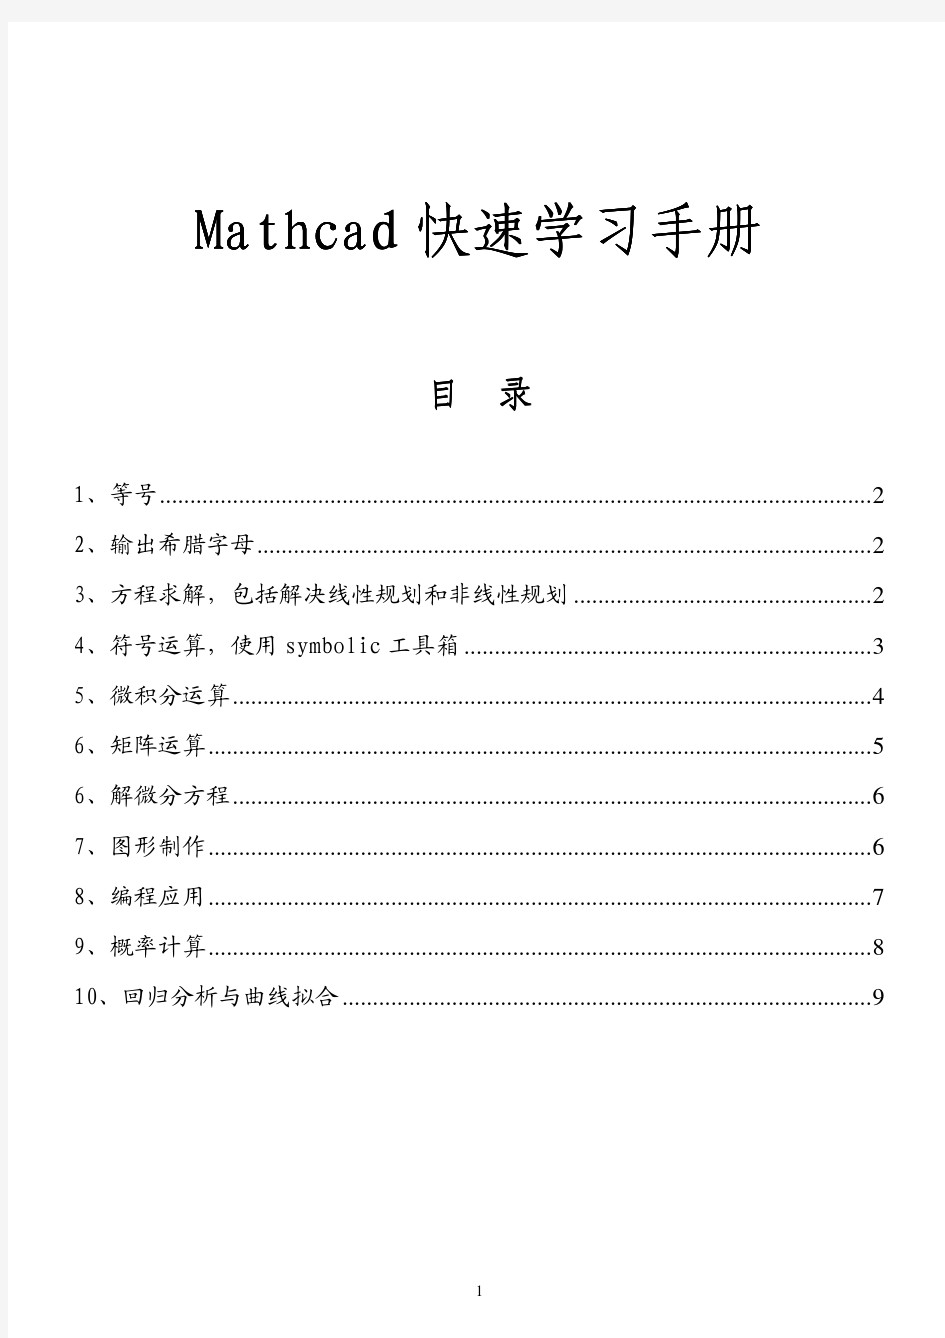 Mathcad 快速学习手册